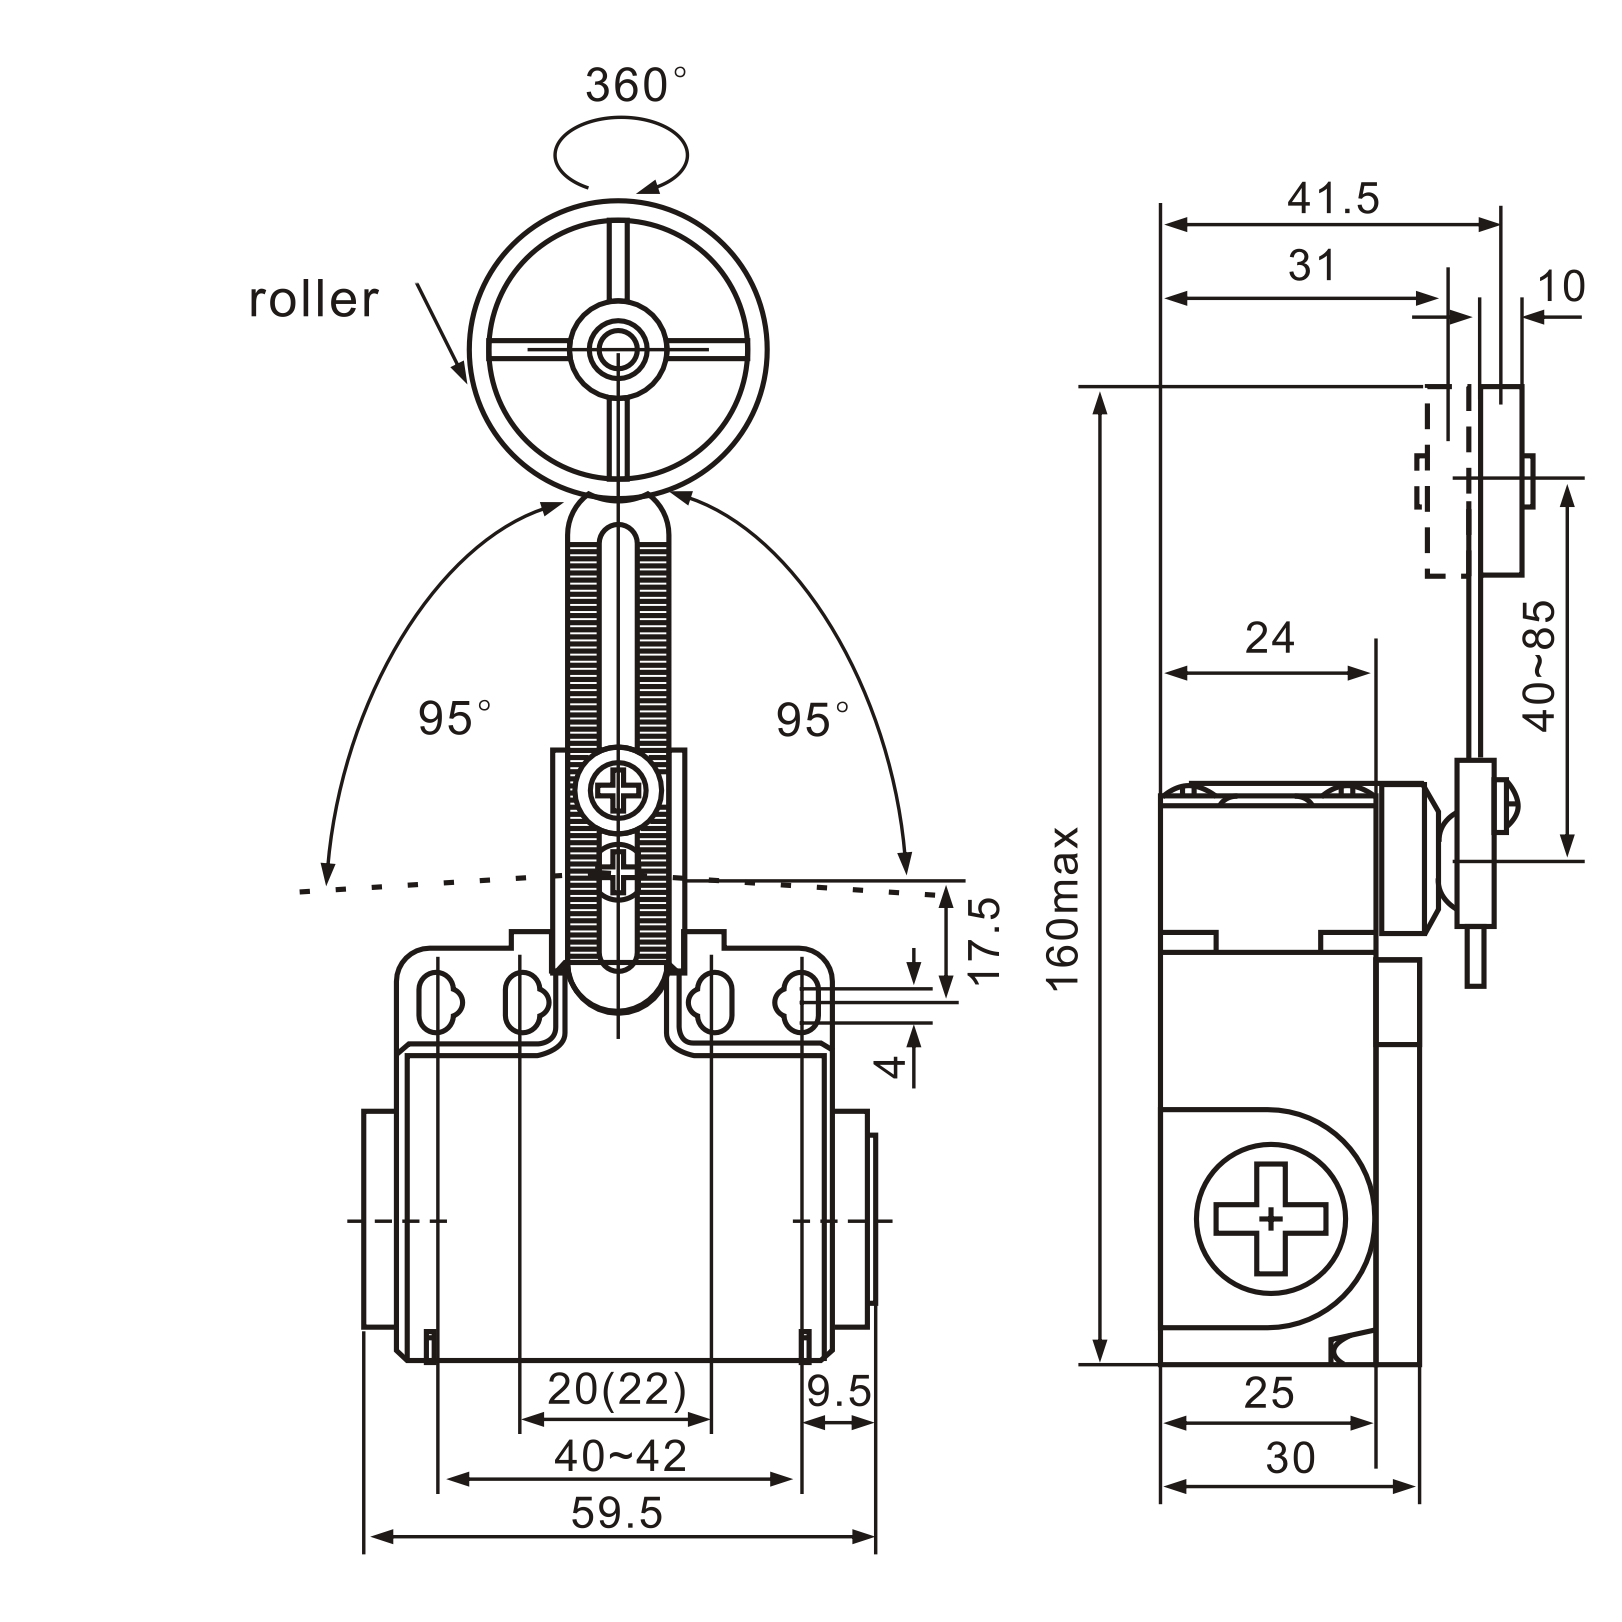 XCK-T149 Elastomer Roller Lever 50 mm Limit Switch Diagram